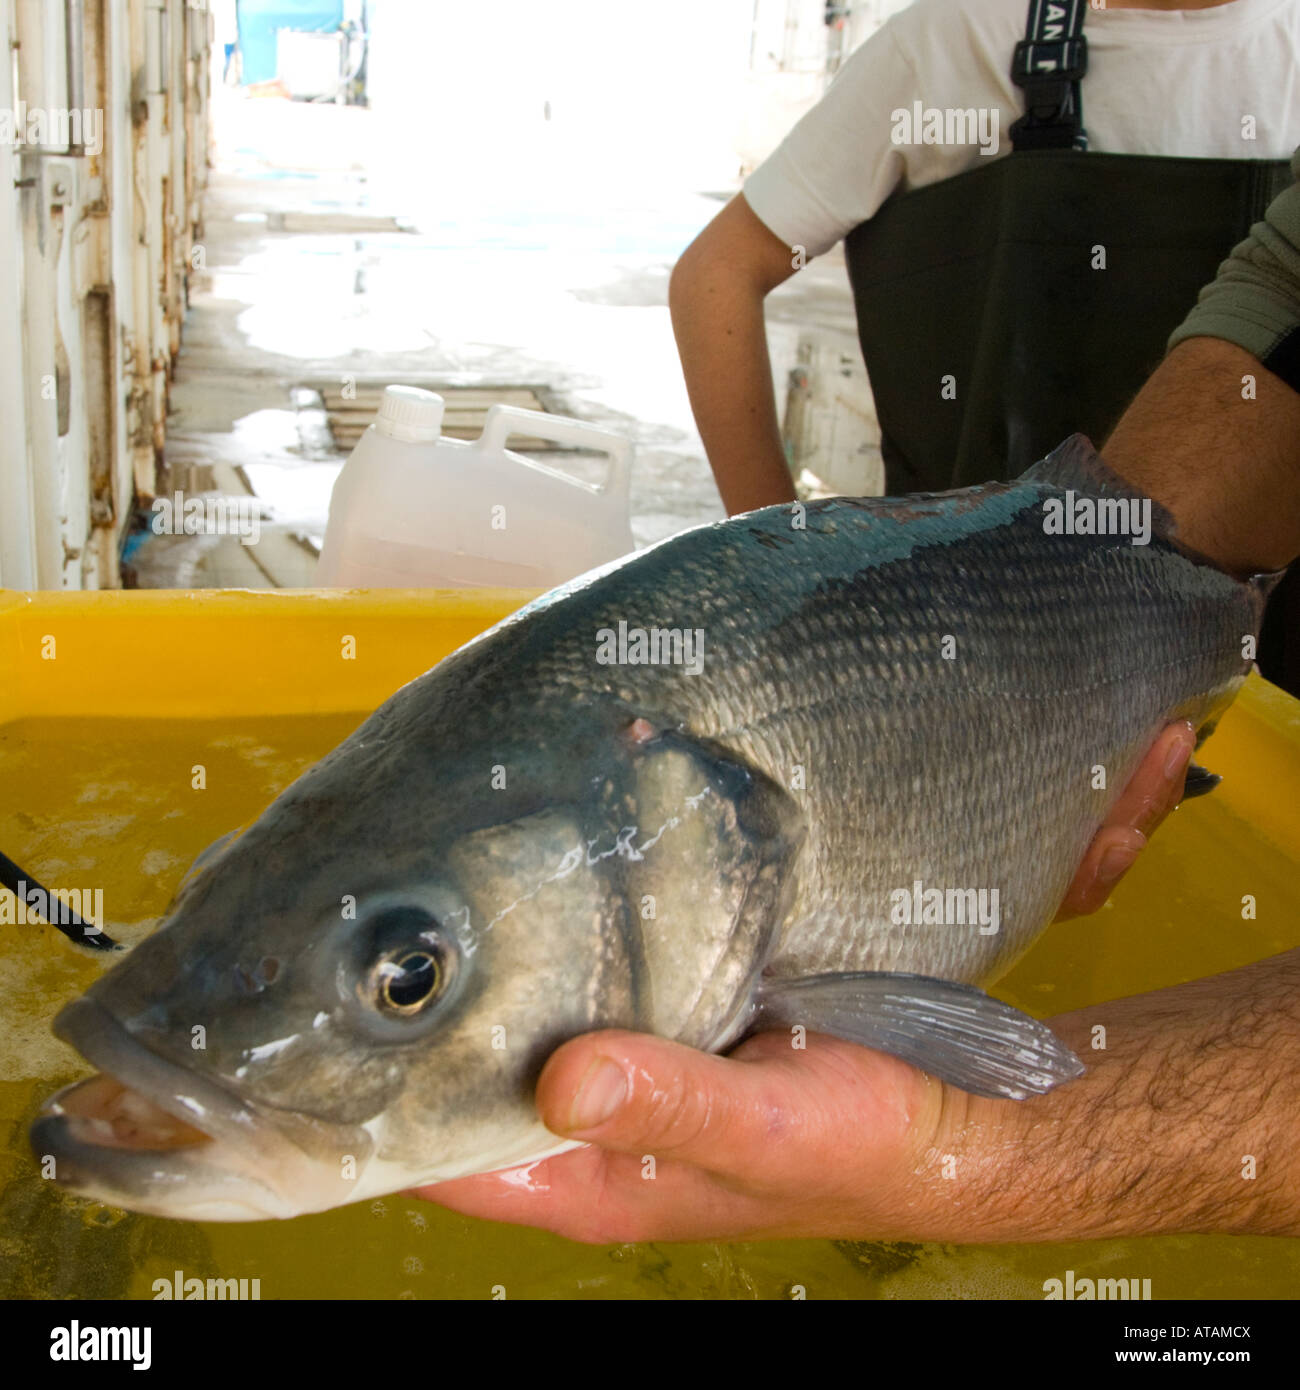 Israel Kibbutz Maagan Mikhael Fish Farm daily tasks Sea Bass reproduction female being checked for hormonal treatment Stock Photo